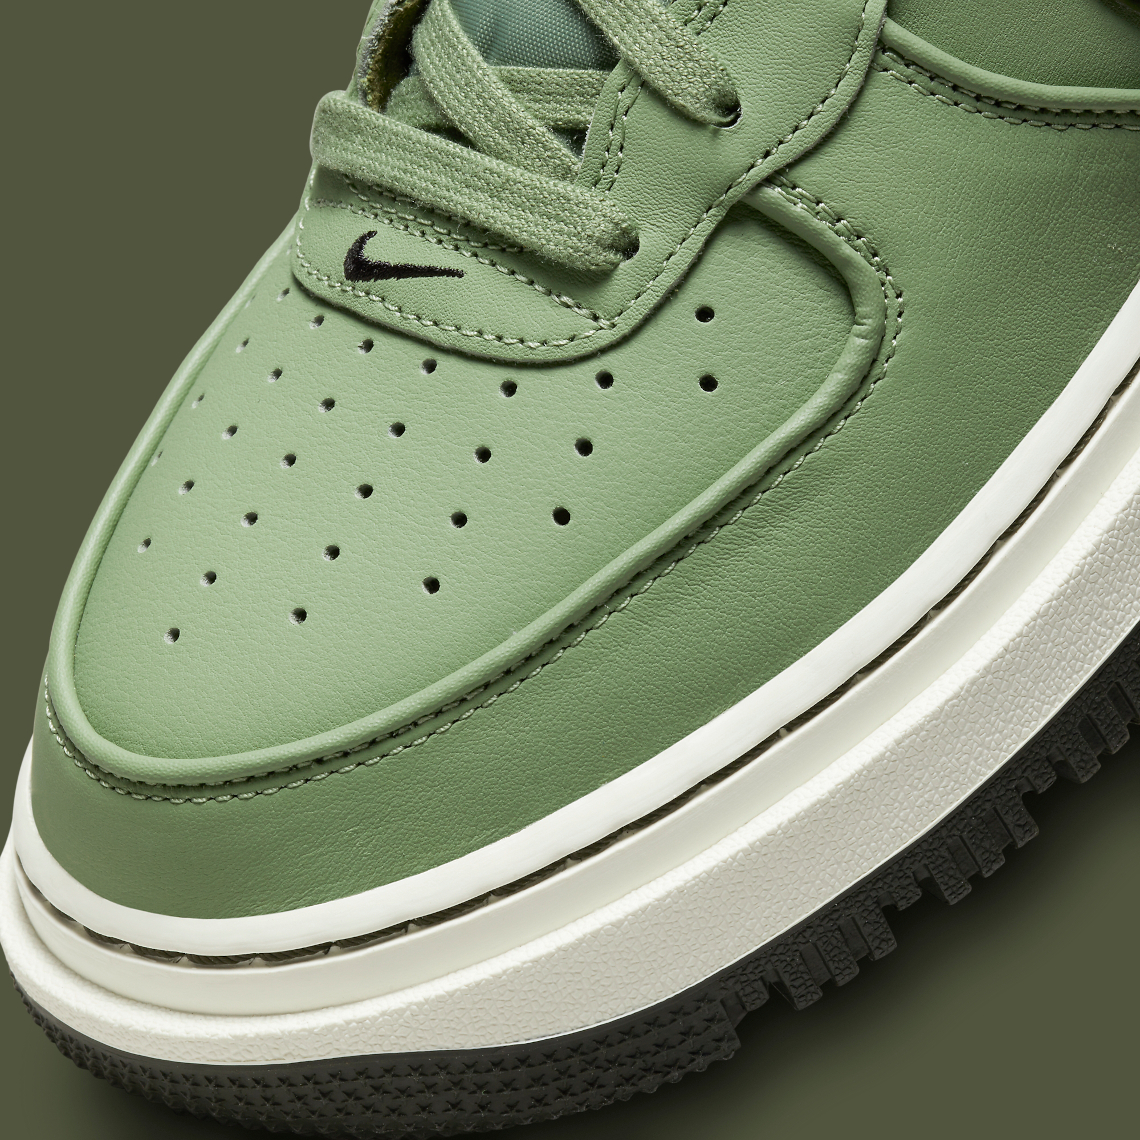 Nike Air Force stockx 1 High Boot Green DA0418 300 6